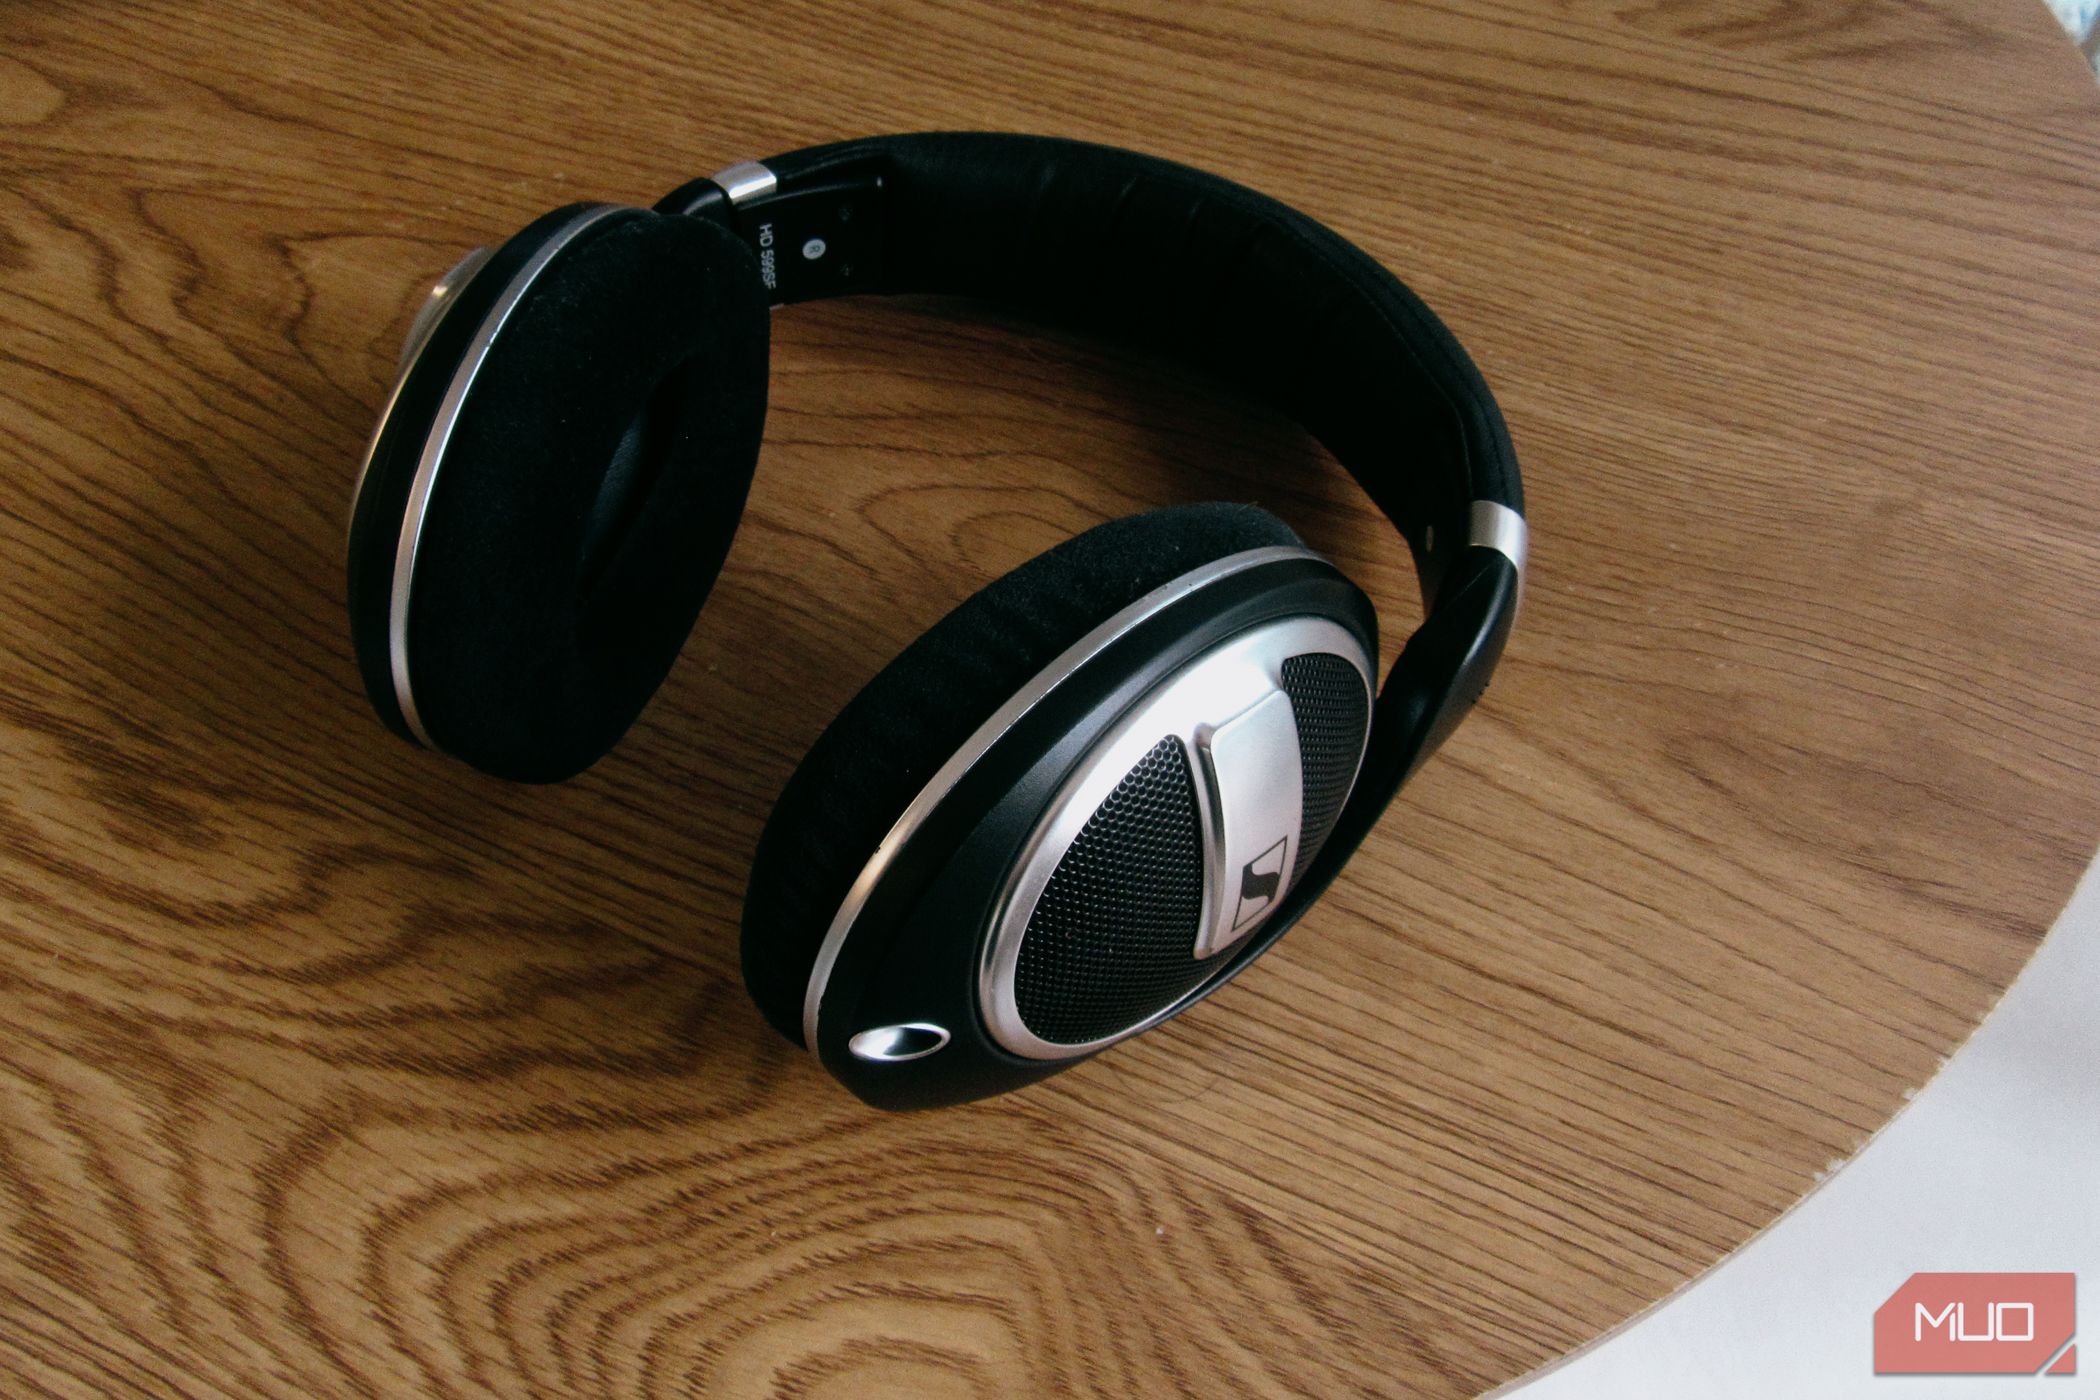 Sennheiser HD 599 SE Headphone with microphone - Black